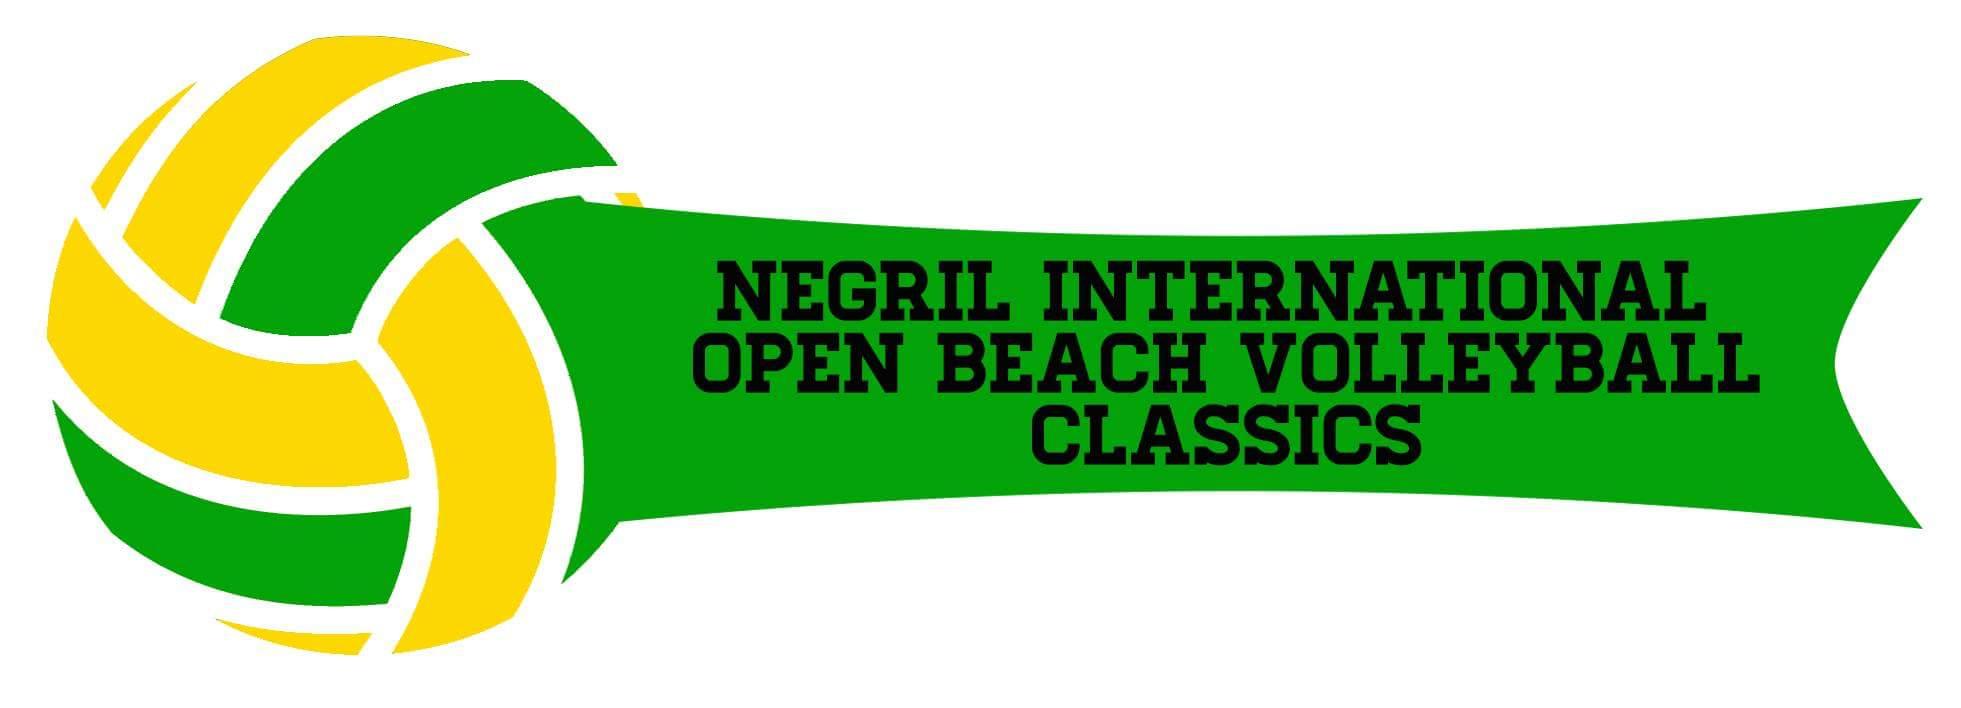 Negril International Open Beach Volleyball Classics